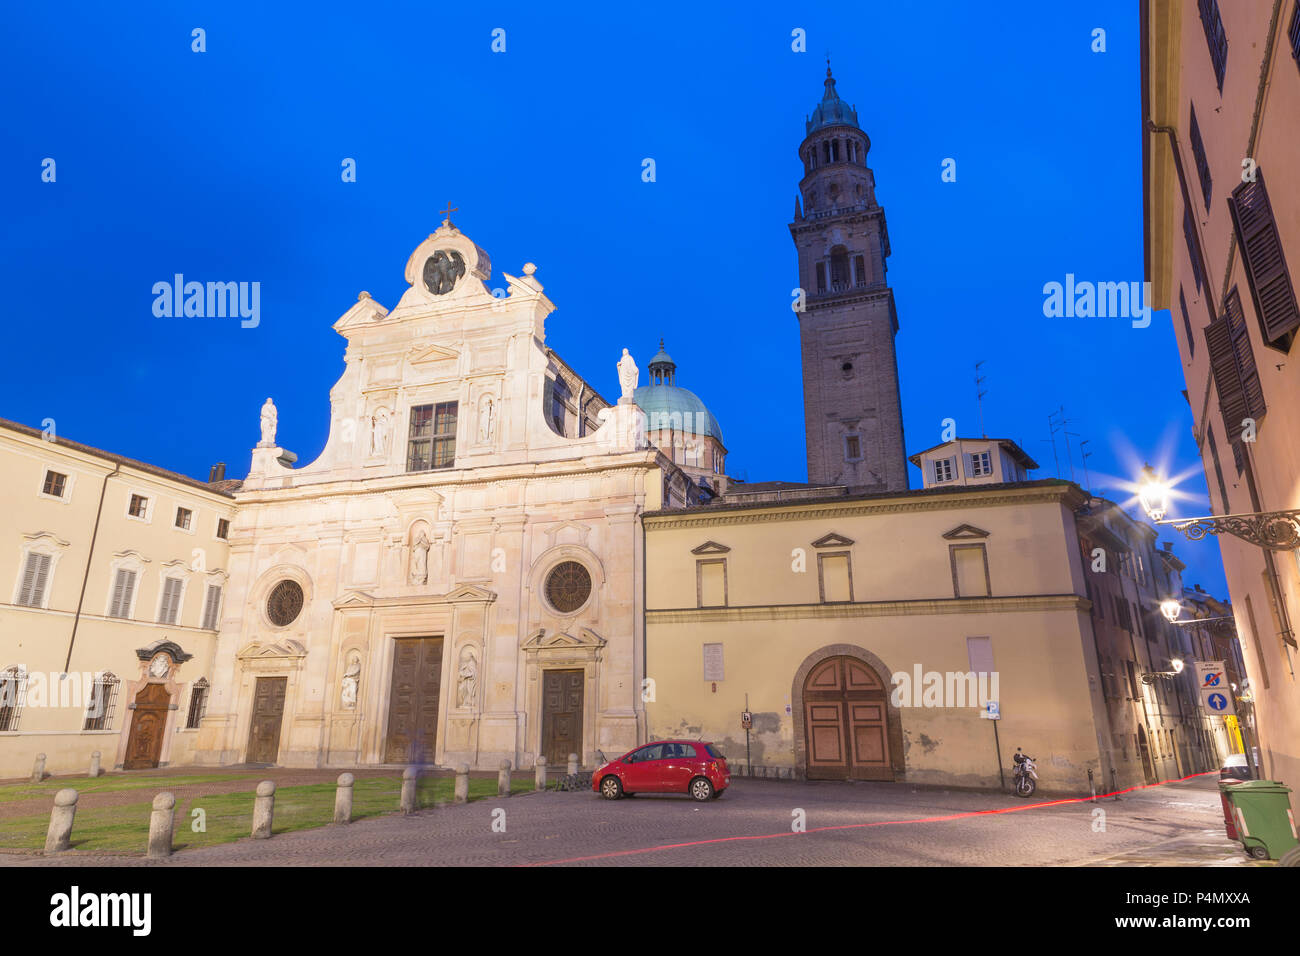 Parma - The baroque church Chiesa di San Giovanni Evangelista (John the Evangelist) at dusk. Stock Photo